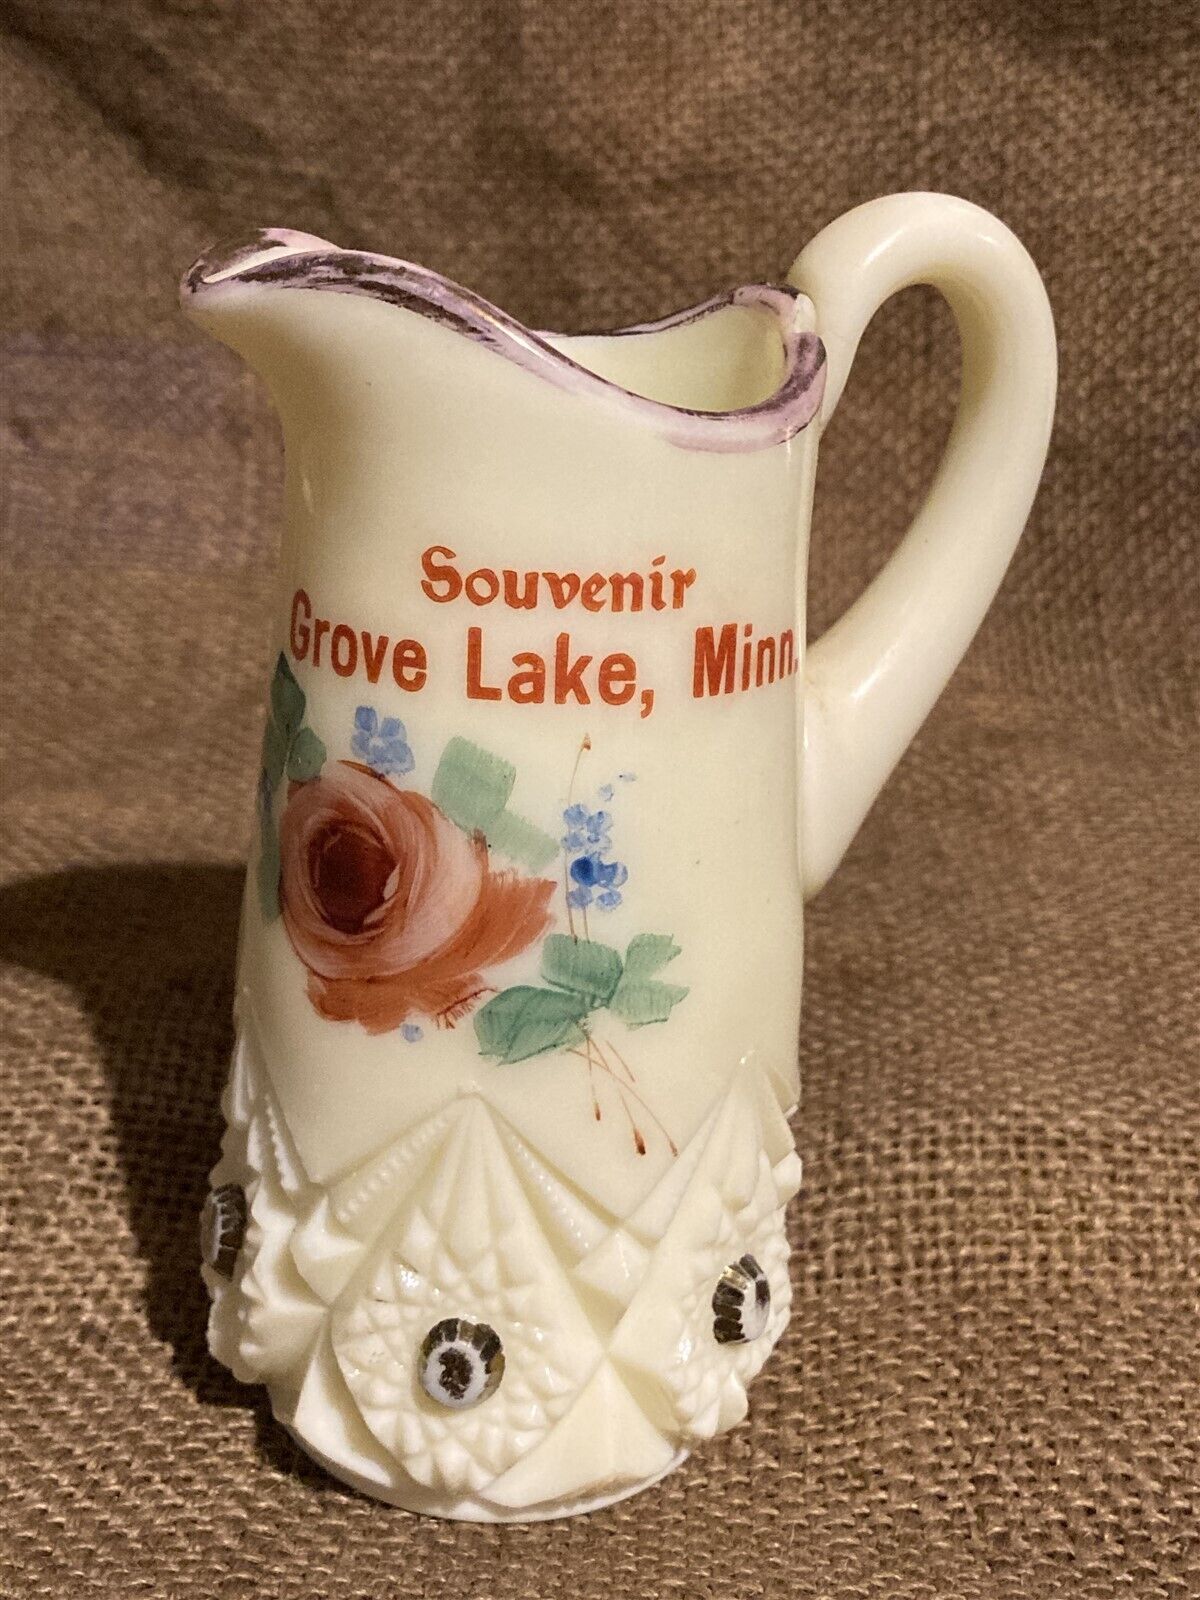 antique souvenir custard glass milk pitcher, Grove Lake, Minnesota